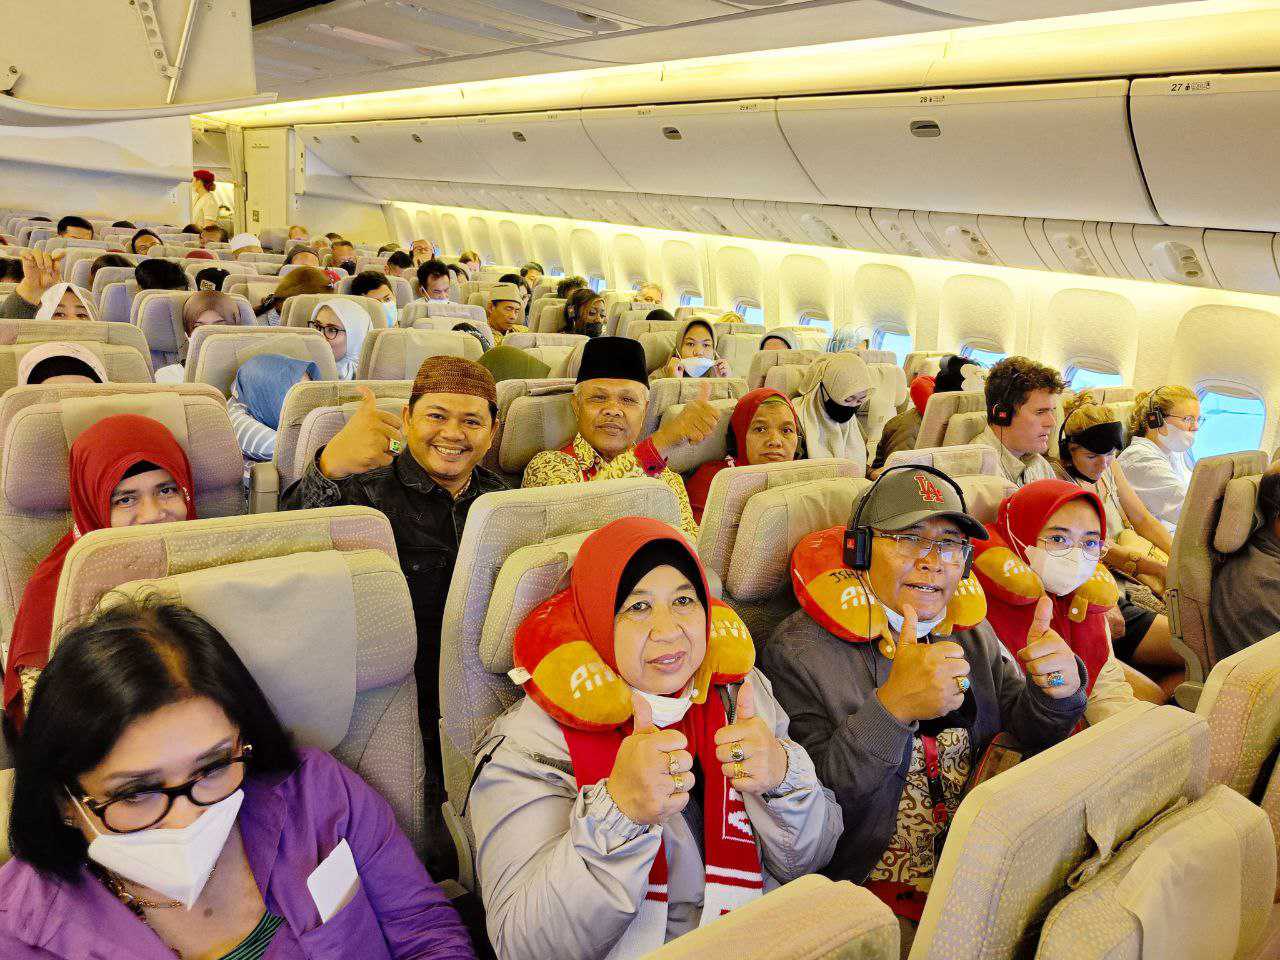 Daftar Umroh Dan Haji Plus Al Hijaz Travel  Jakarta Barat